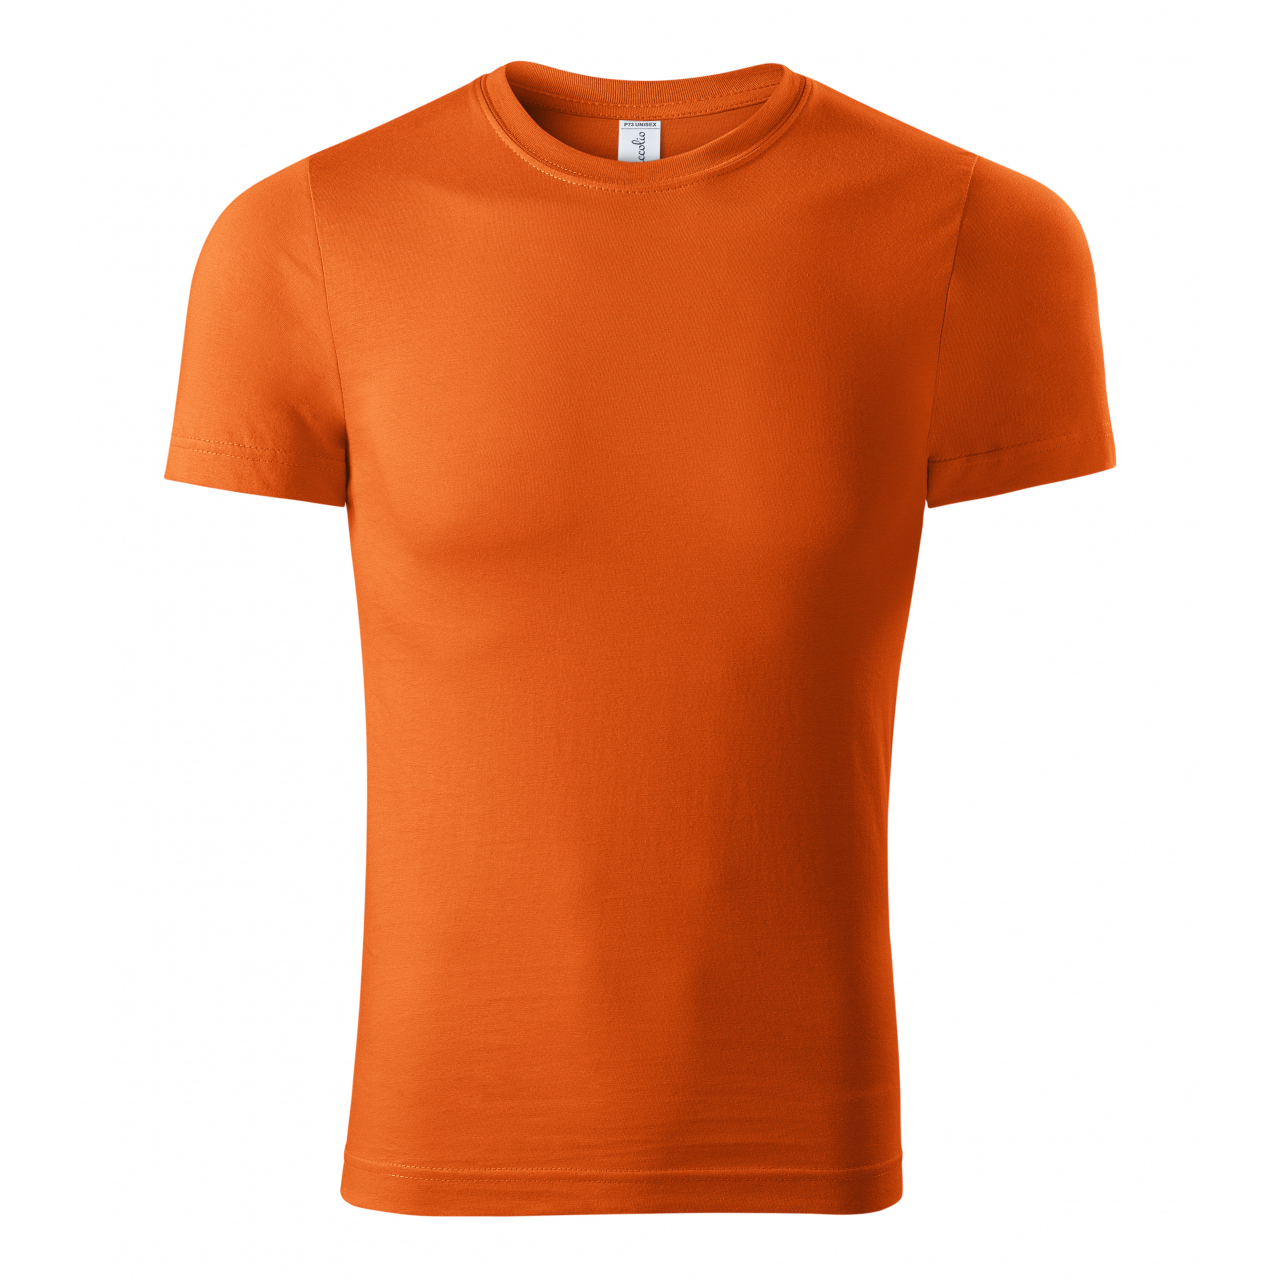 Tričko unisex Piccolio Paint - oranžové, L